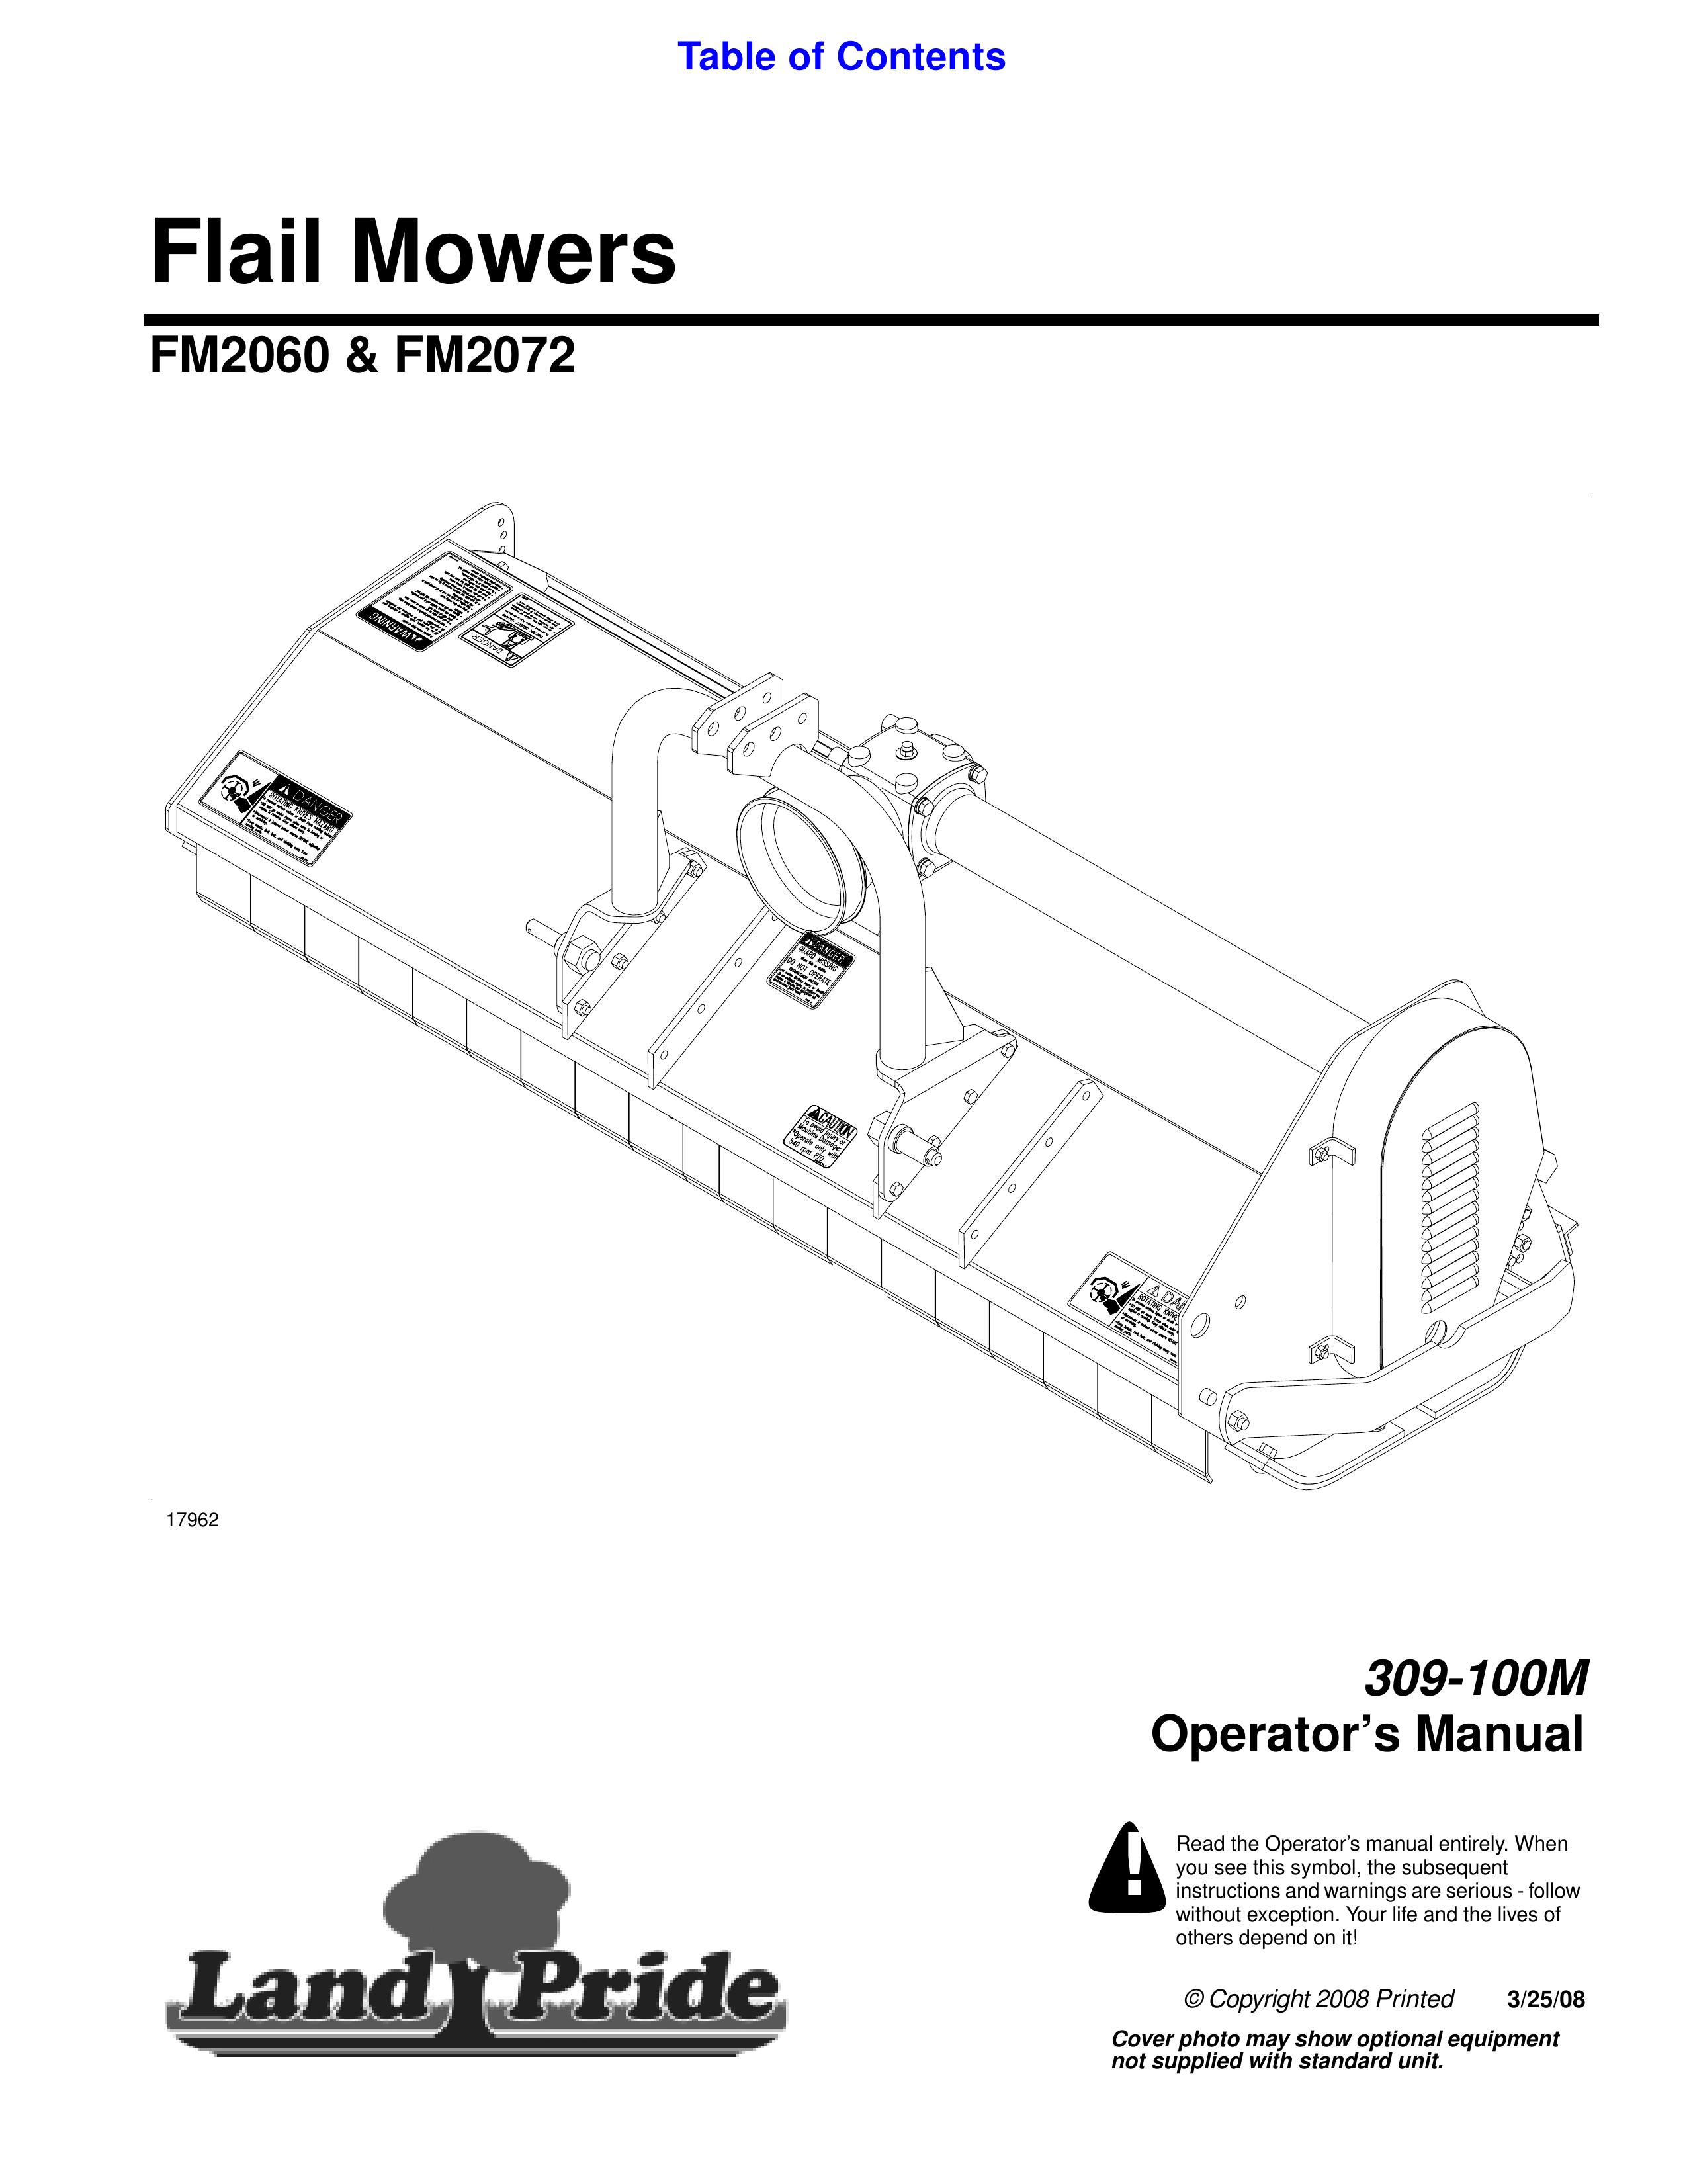 Land Pride 309-100M Lawn Mower User Manual